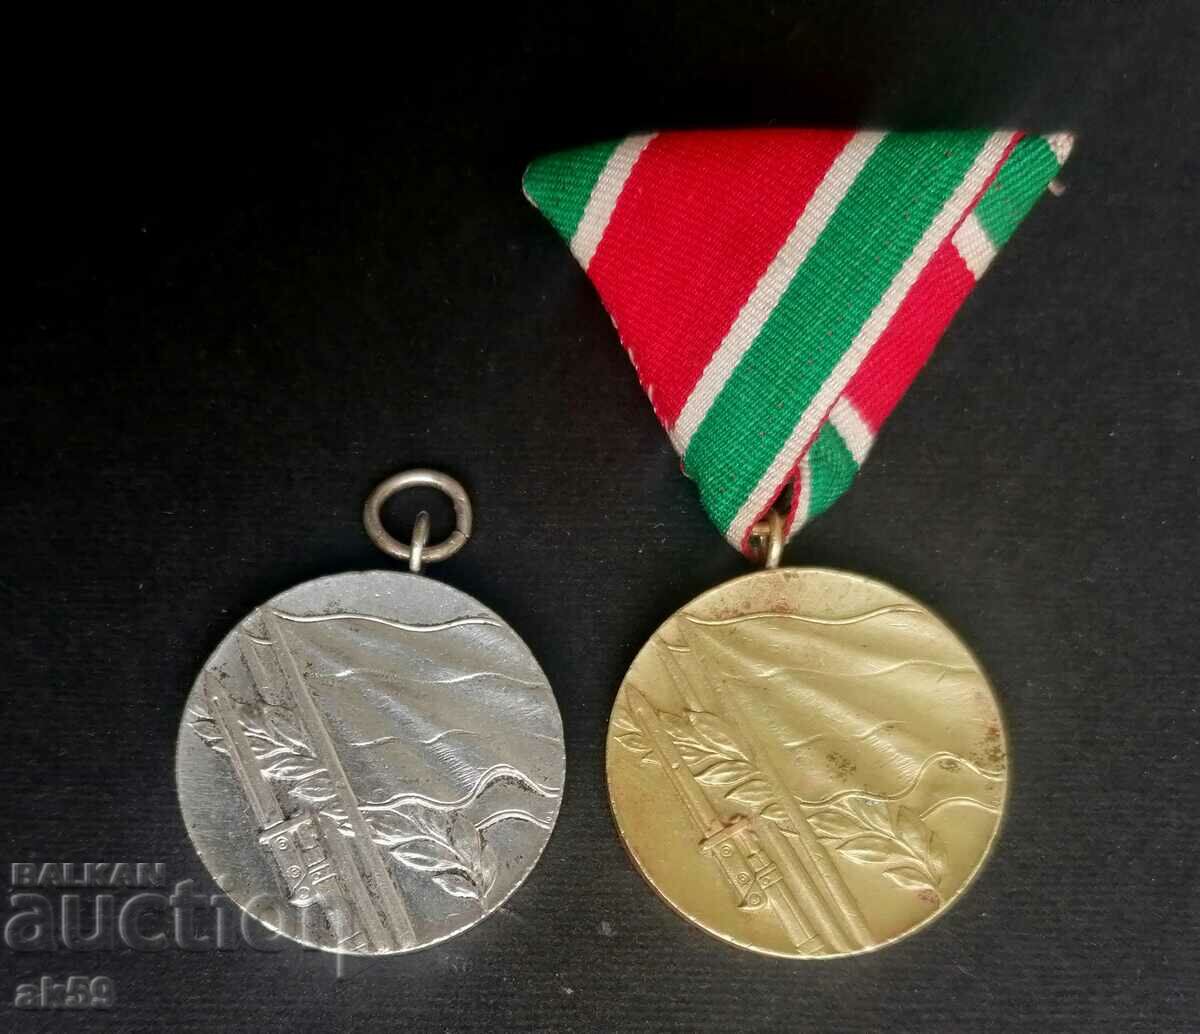 Medalie rară „Războiul Patriotic 1944-1945” - metal galben.